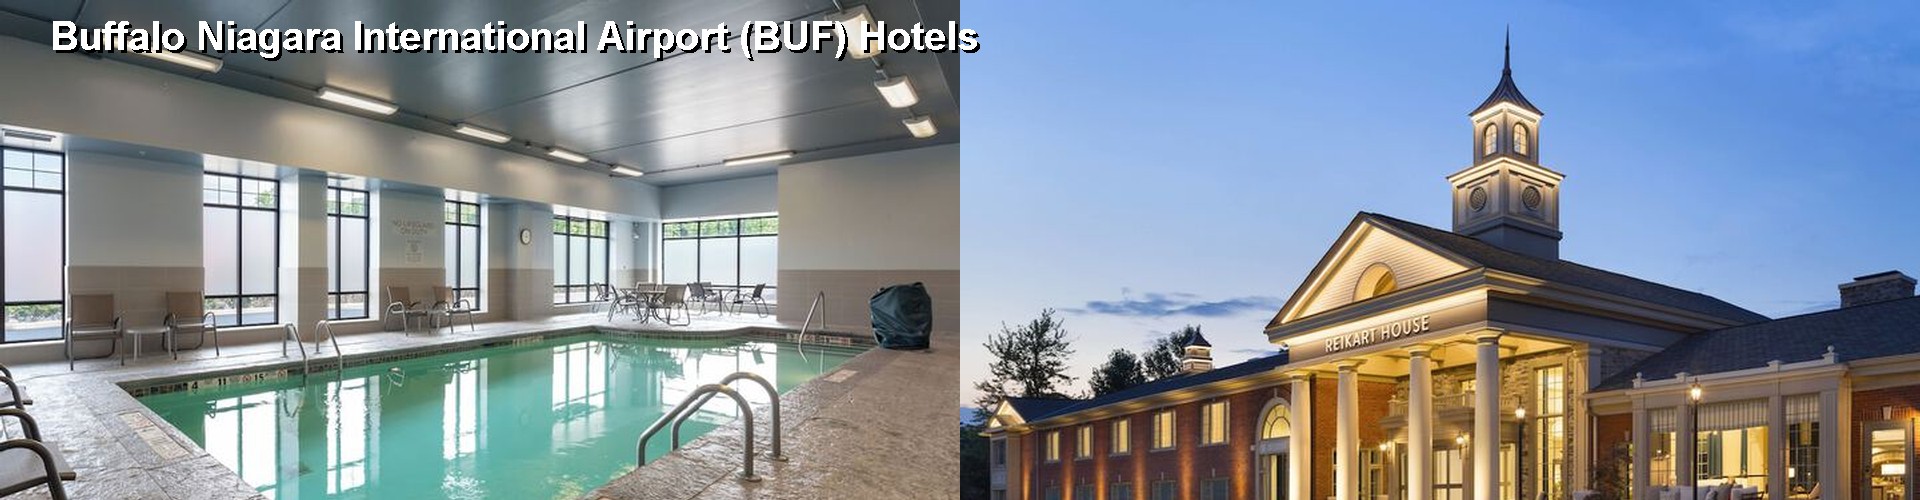 5 Best Hotels near Buffalo Niagara International Airport (BUF)